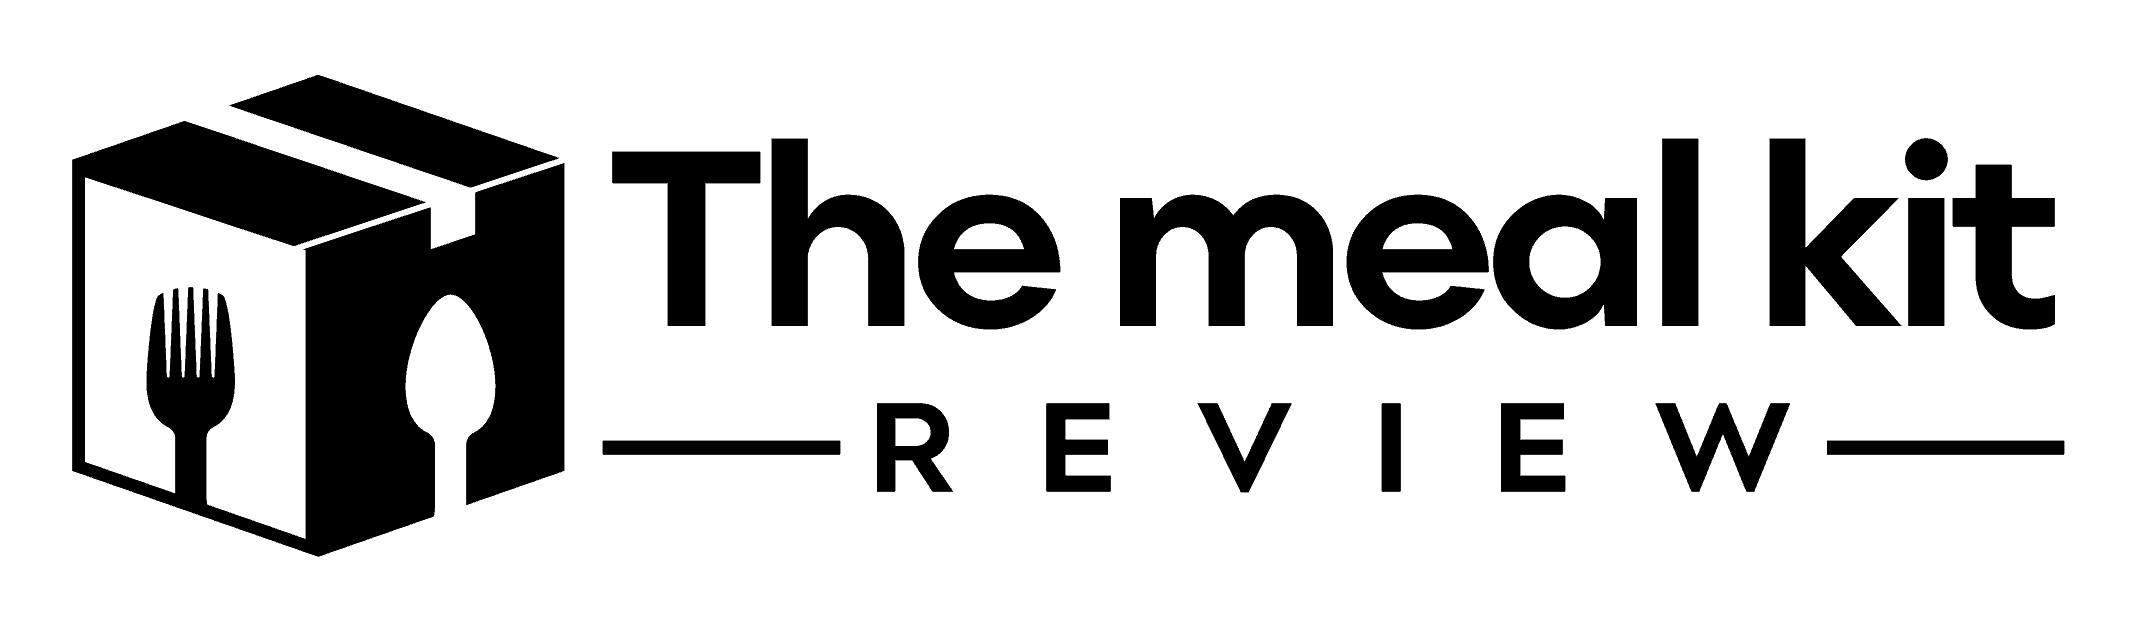 Themealkitreview logo